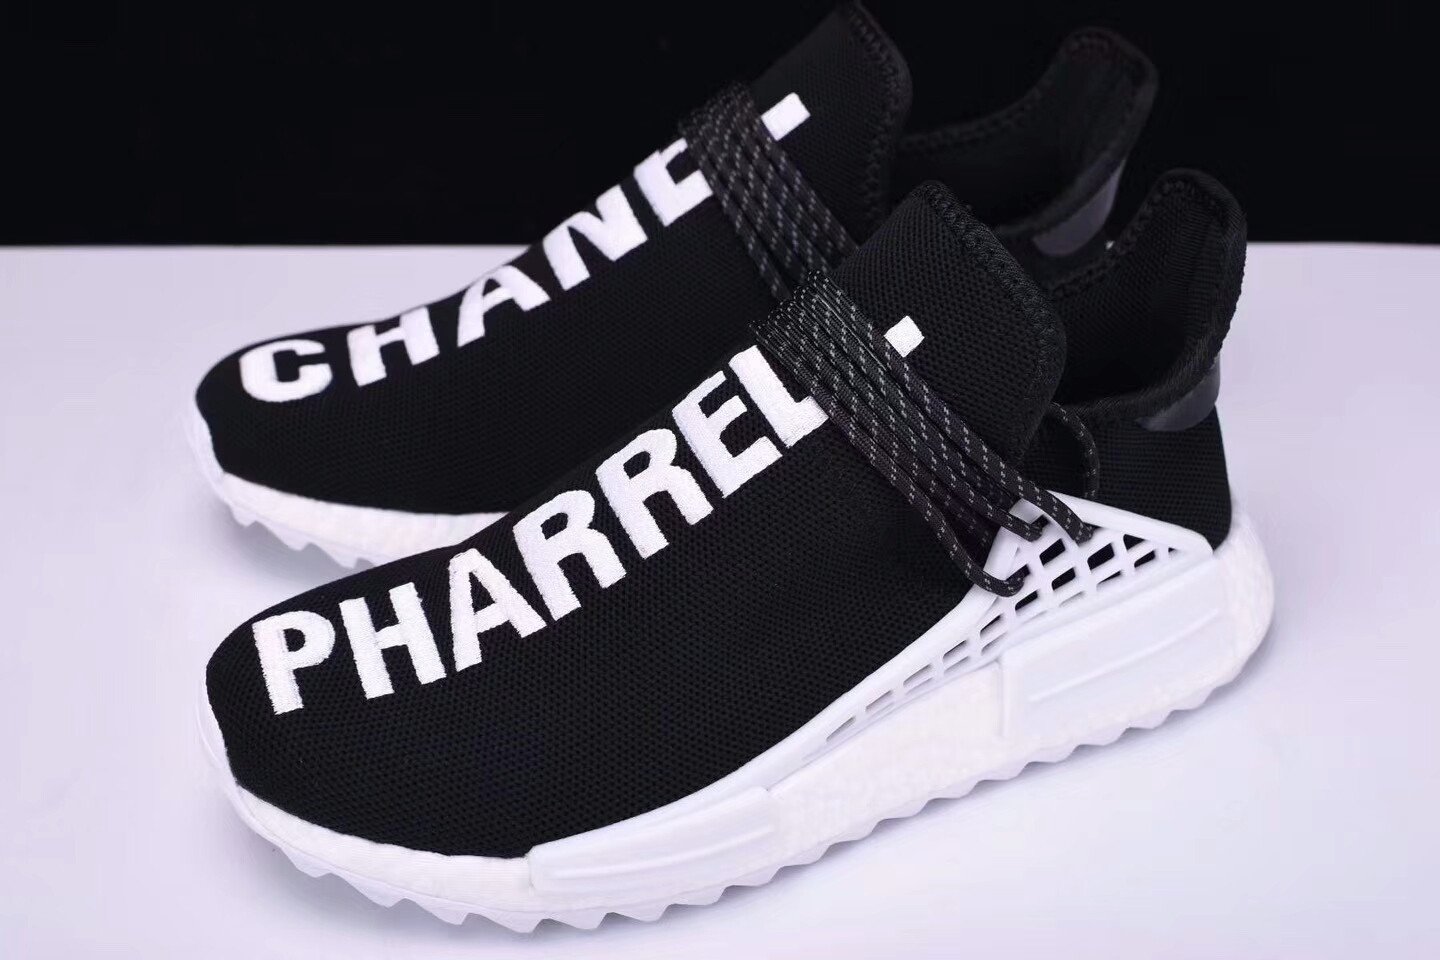 Alltopshoes Chanel X Pharrell Williams X Adidas Nmd Human Race